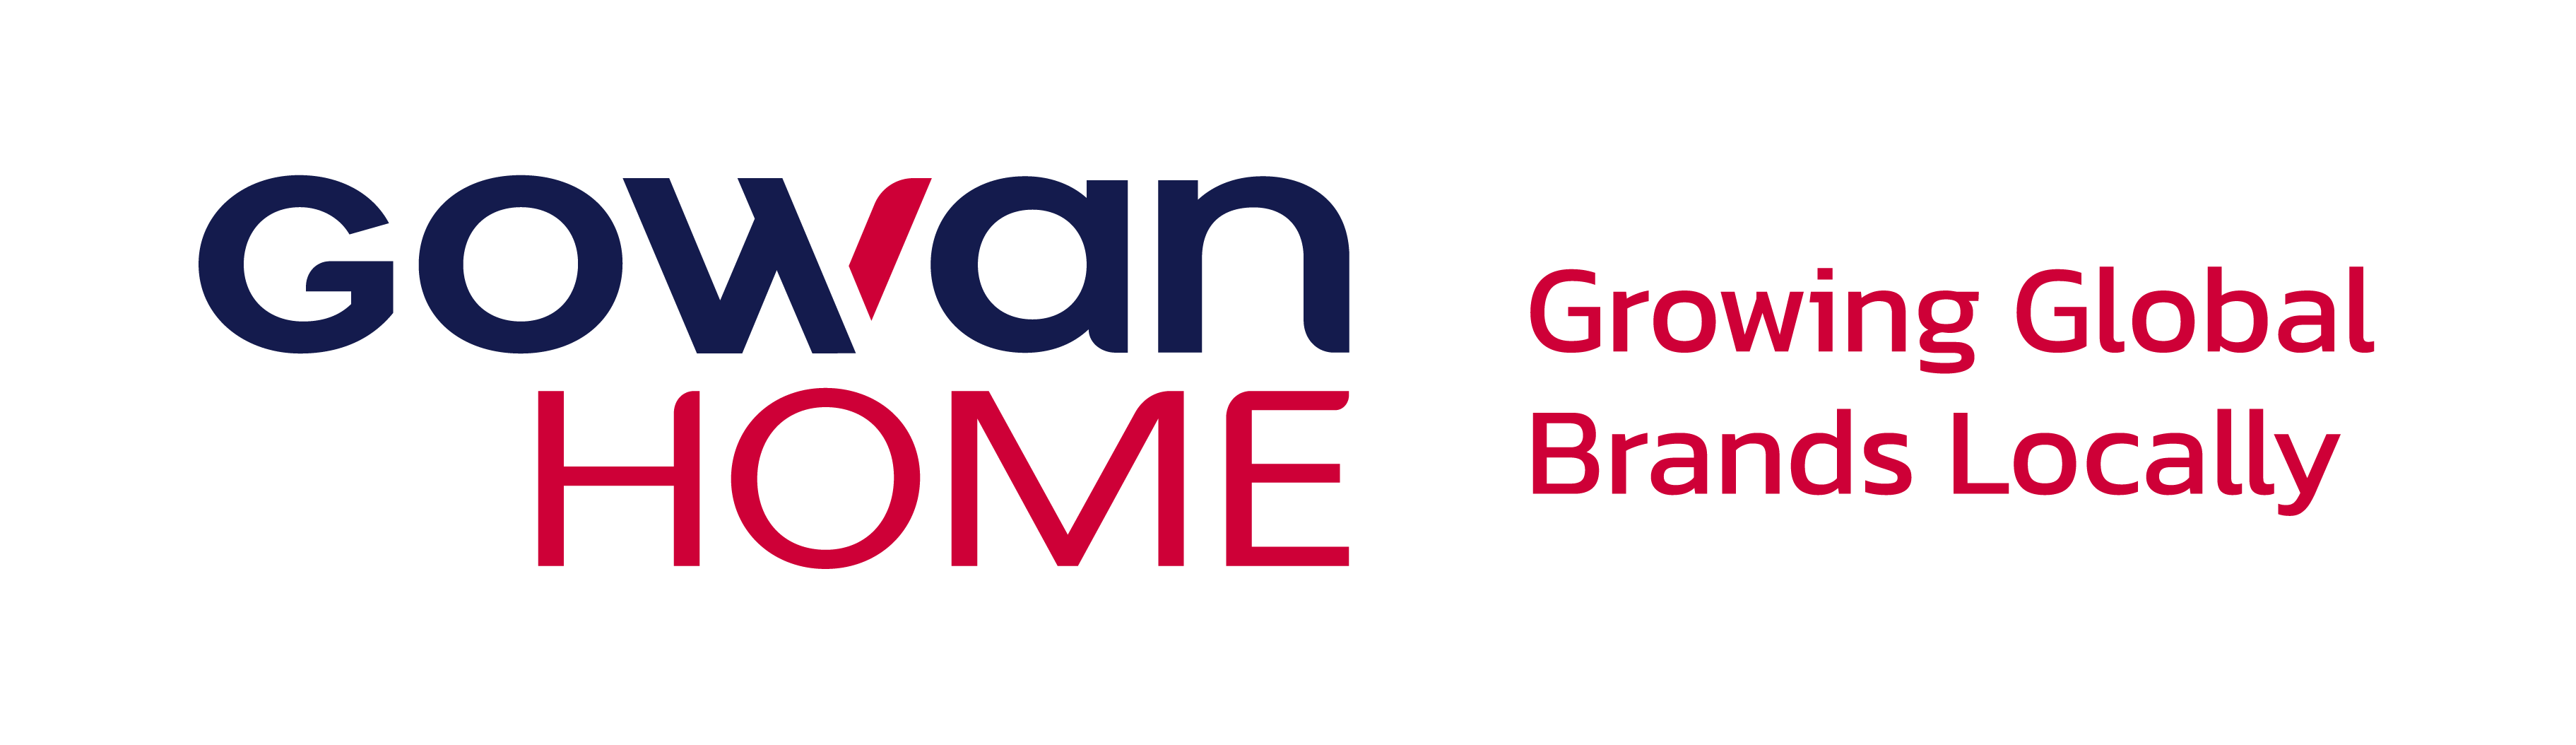 Gowan Home logo